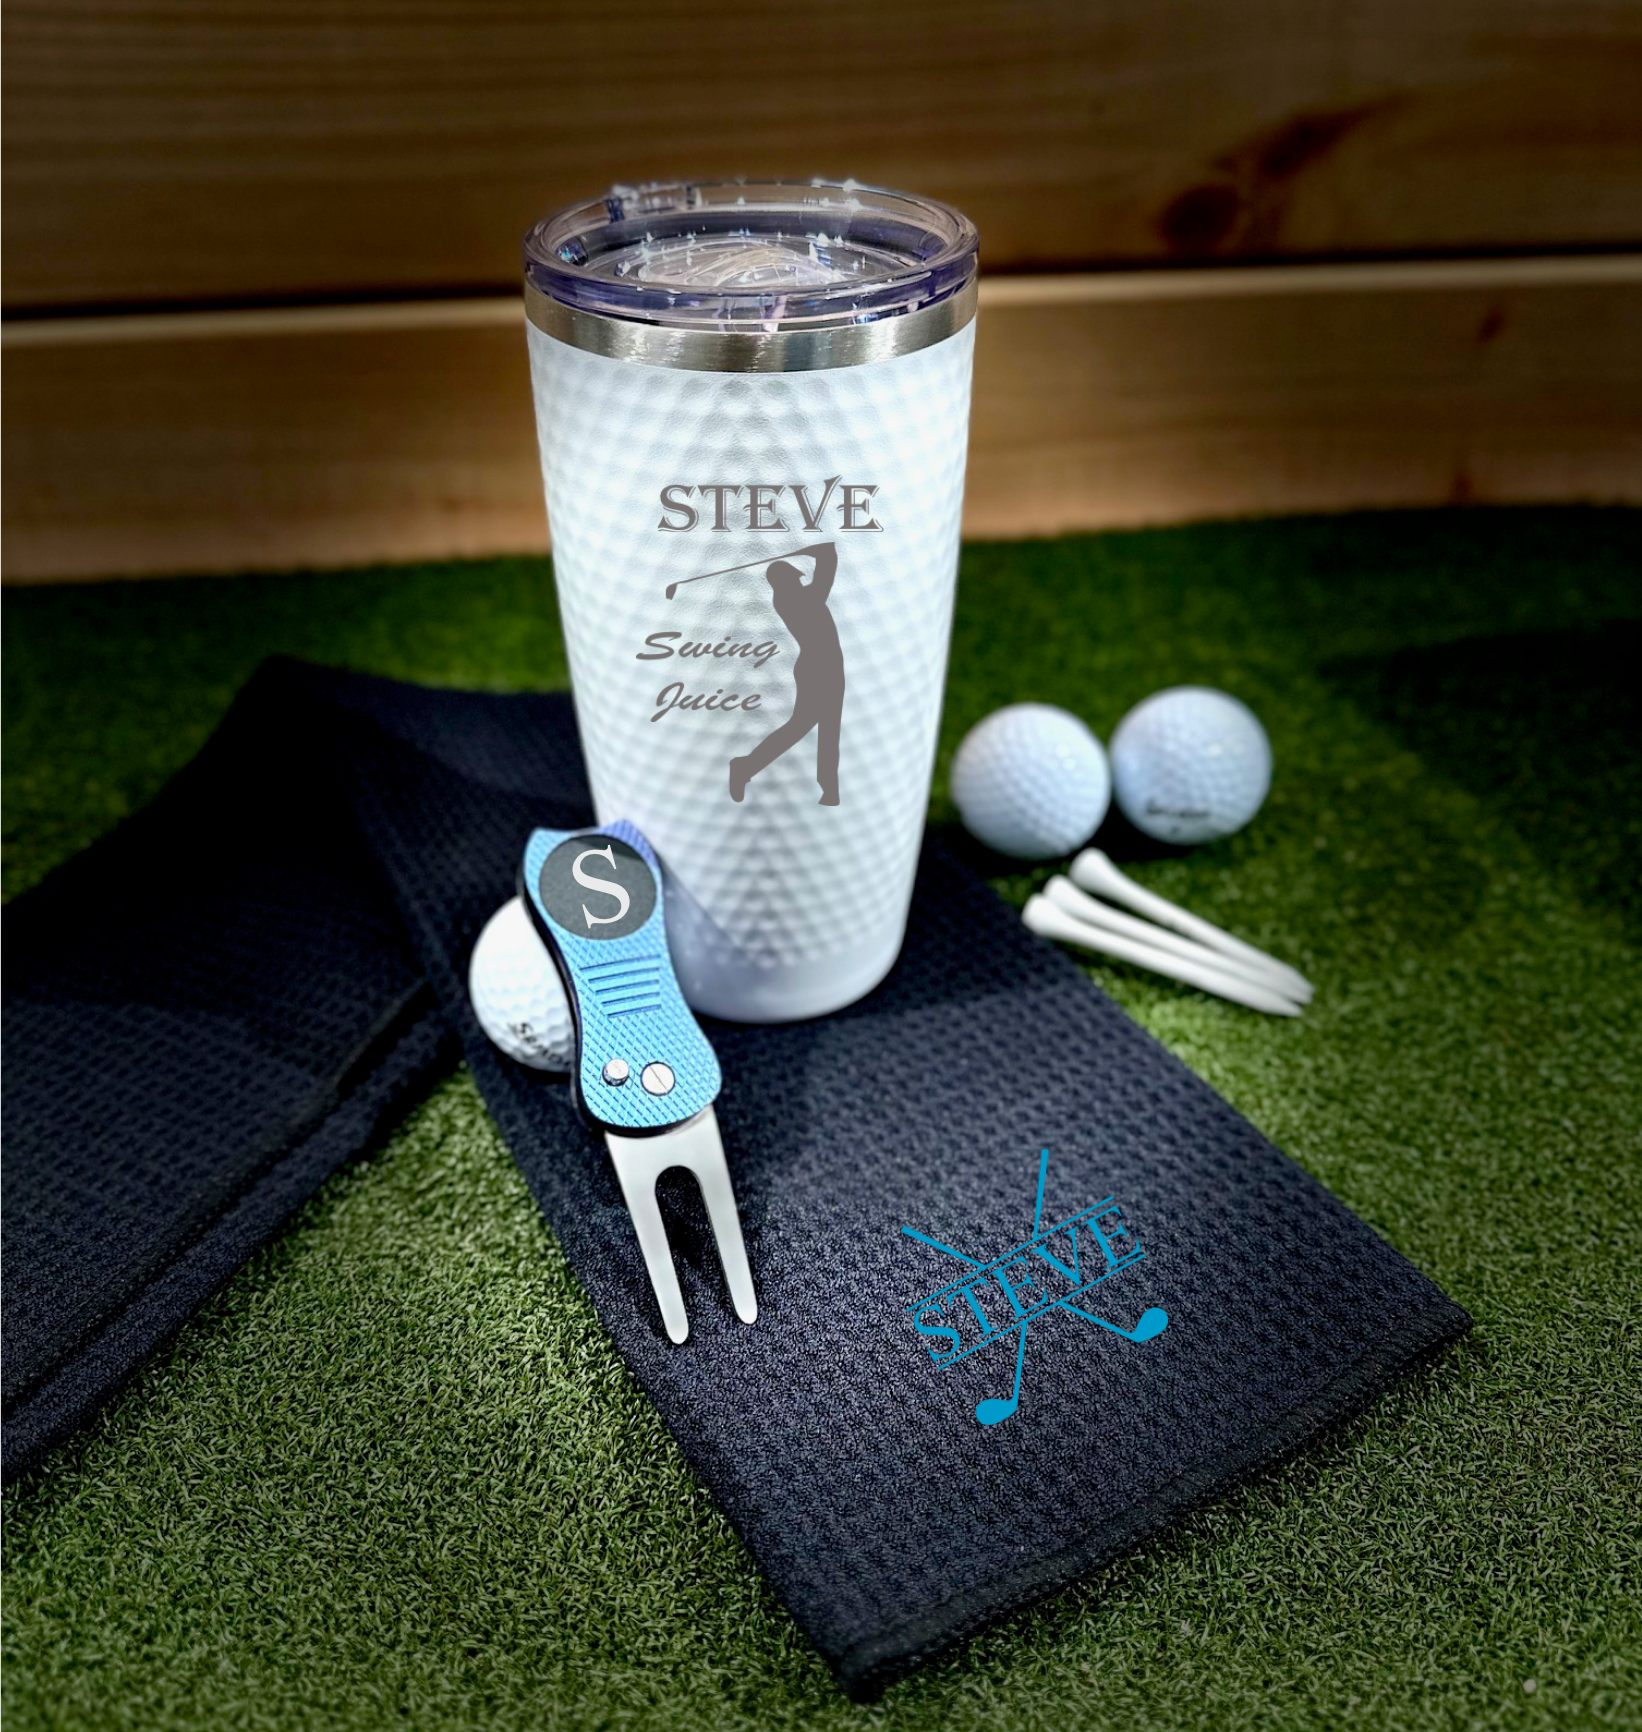 Engraved Corporate Black Leatherette Golf Gift Set